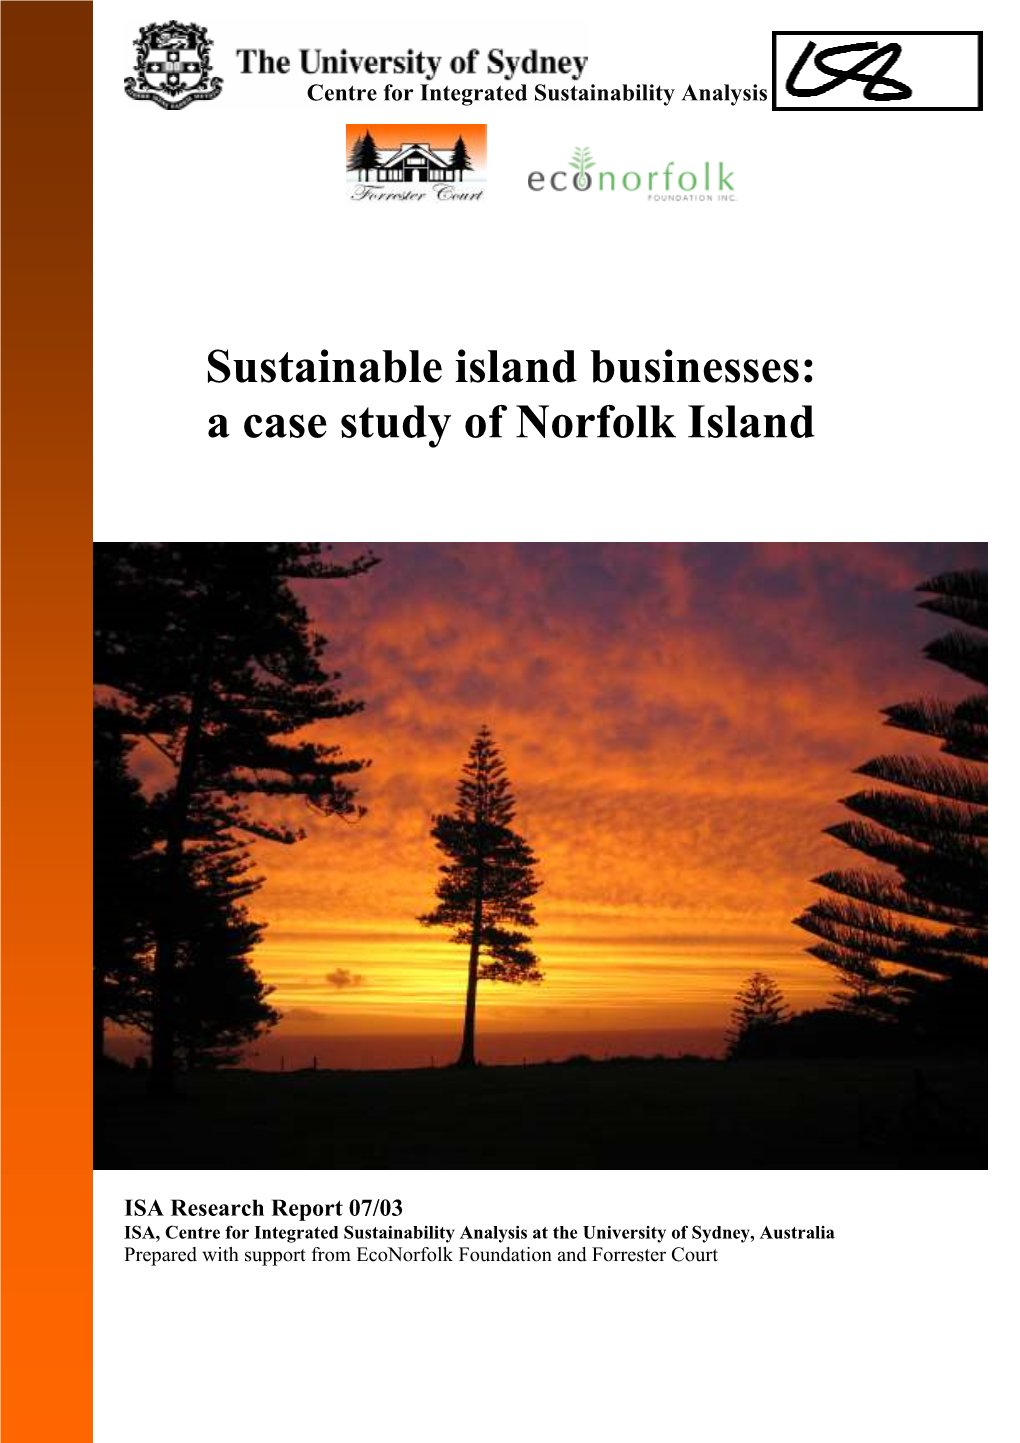 A Case Study of Norfolk Island